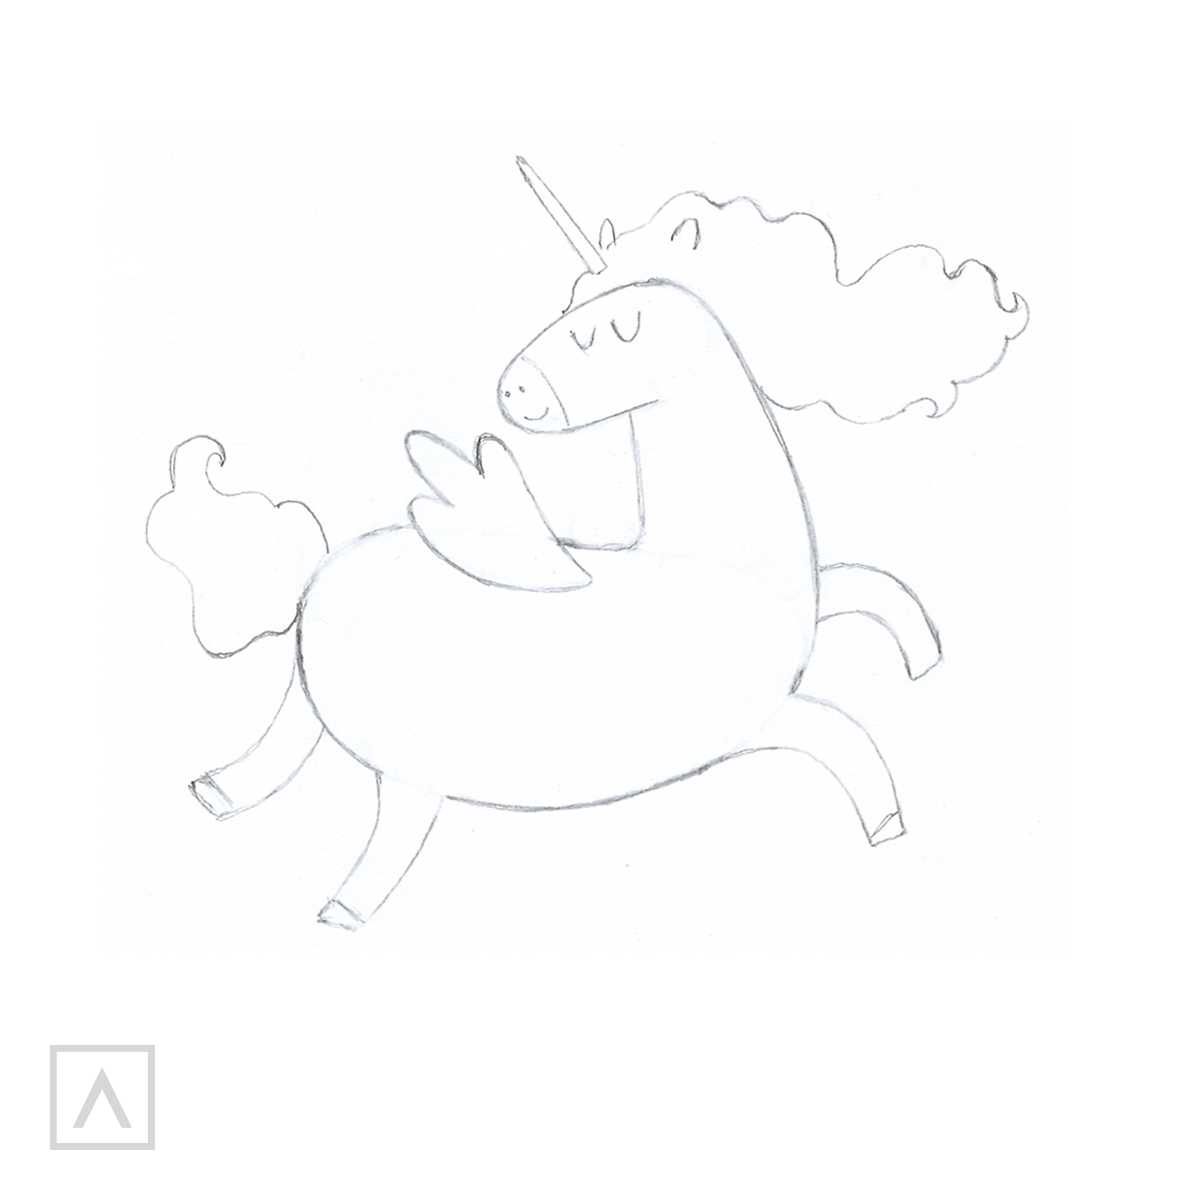 How to Draw a Unicorn - Step 4